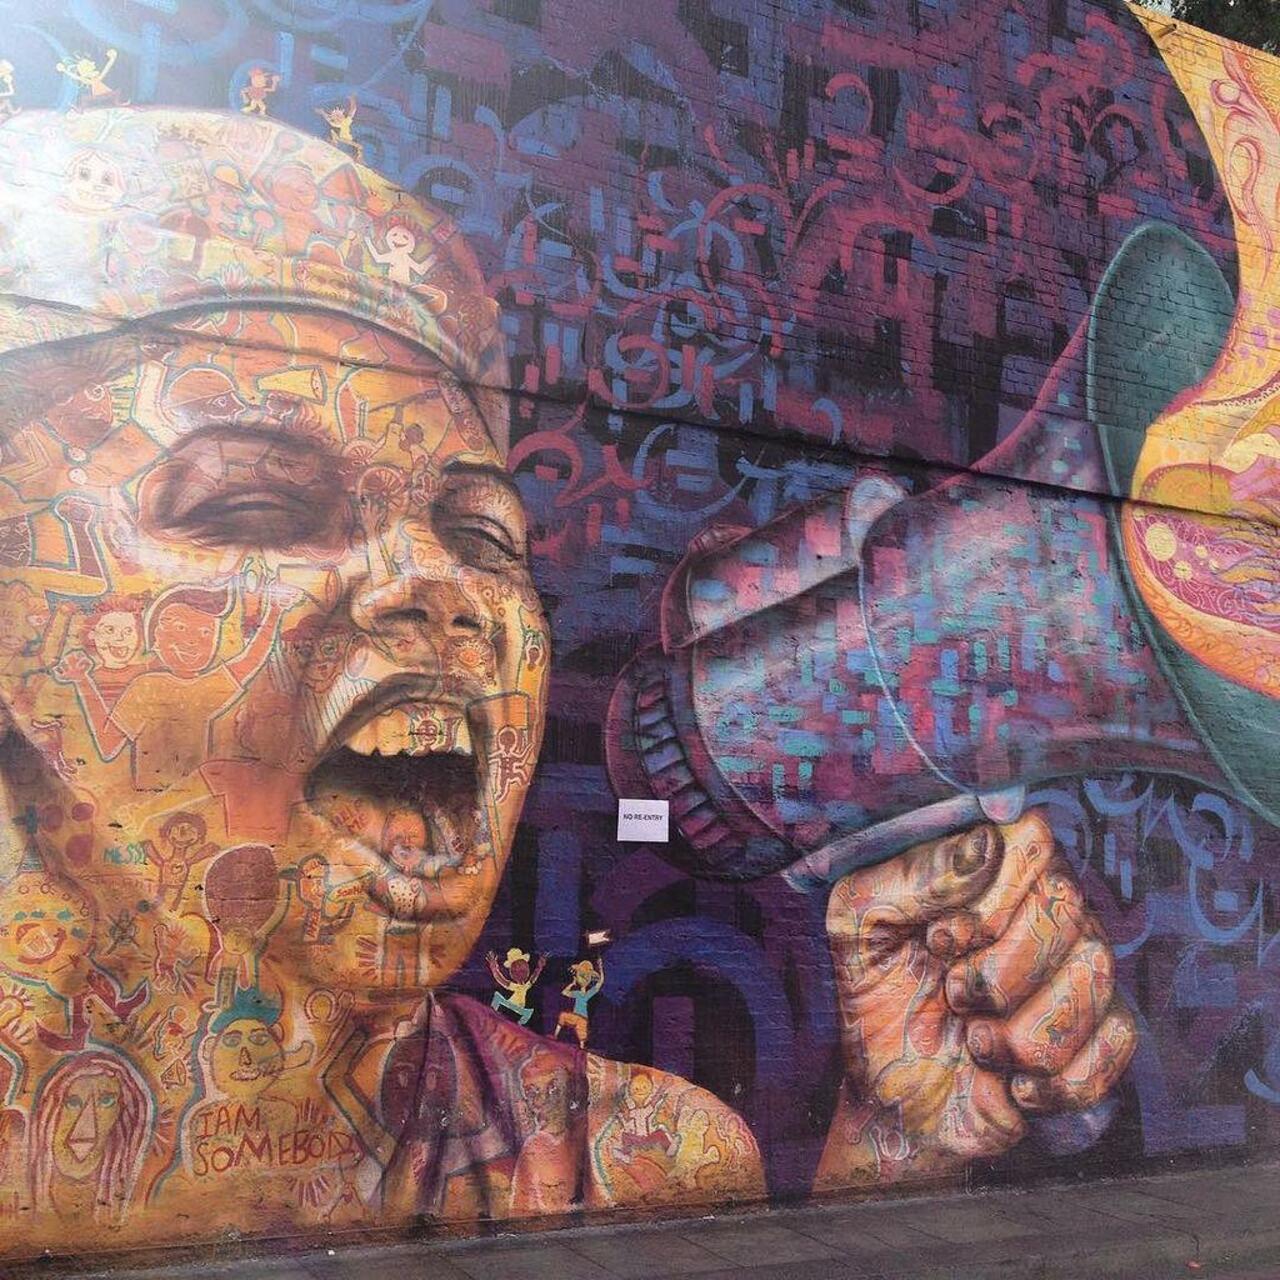 #streetart #graffiti #streetartlondon #london #thisislondon by isadarko http://t.co/5aXdckS0Zr